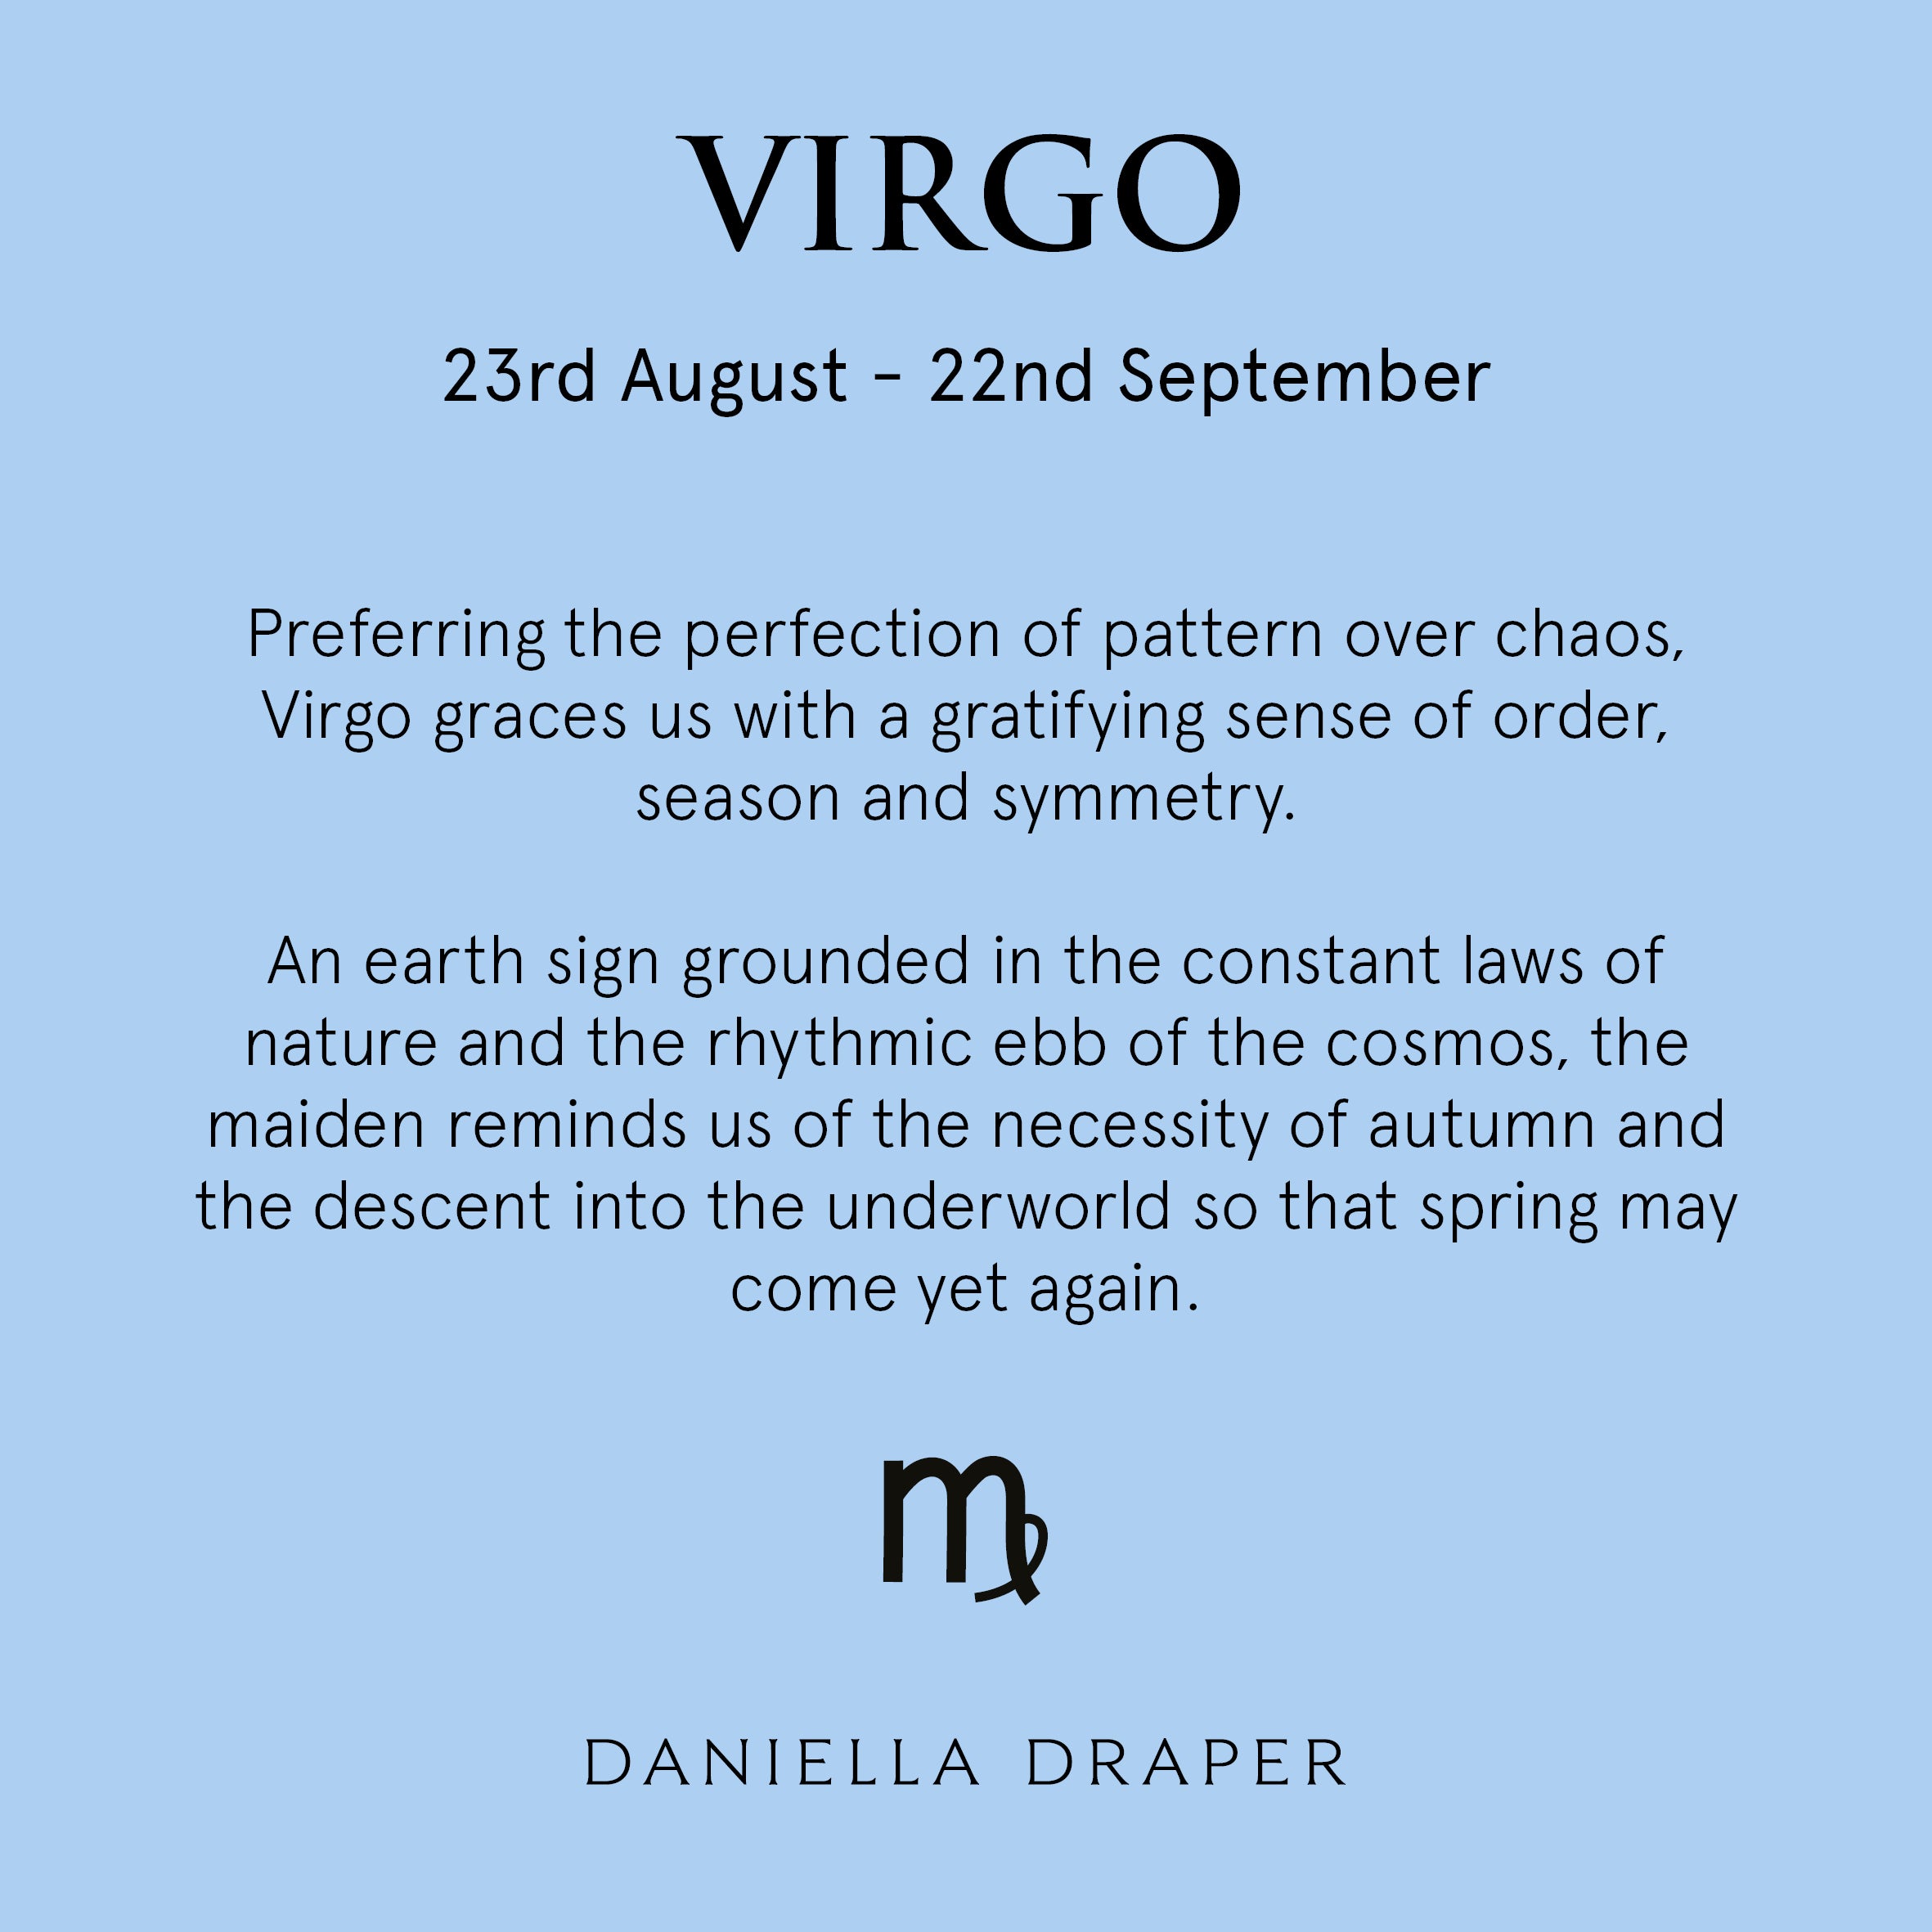 Silver Mini Virgo Horoscope & Peridot Birthstone Necklace